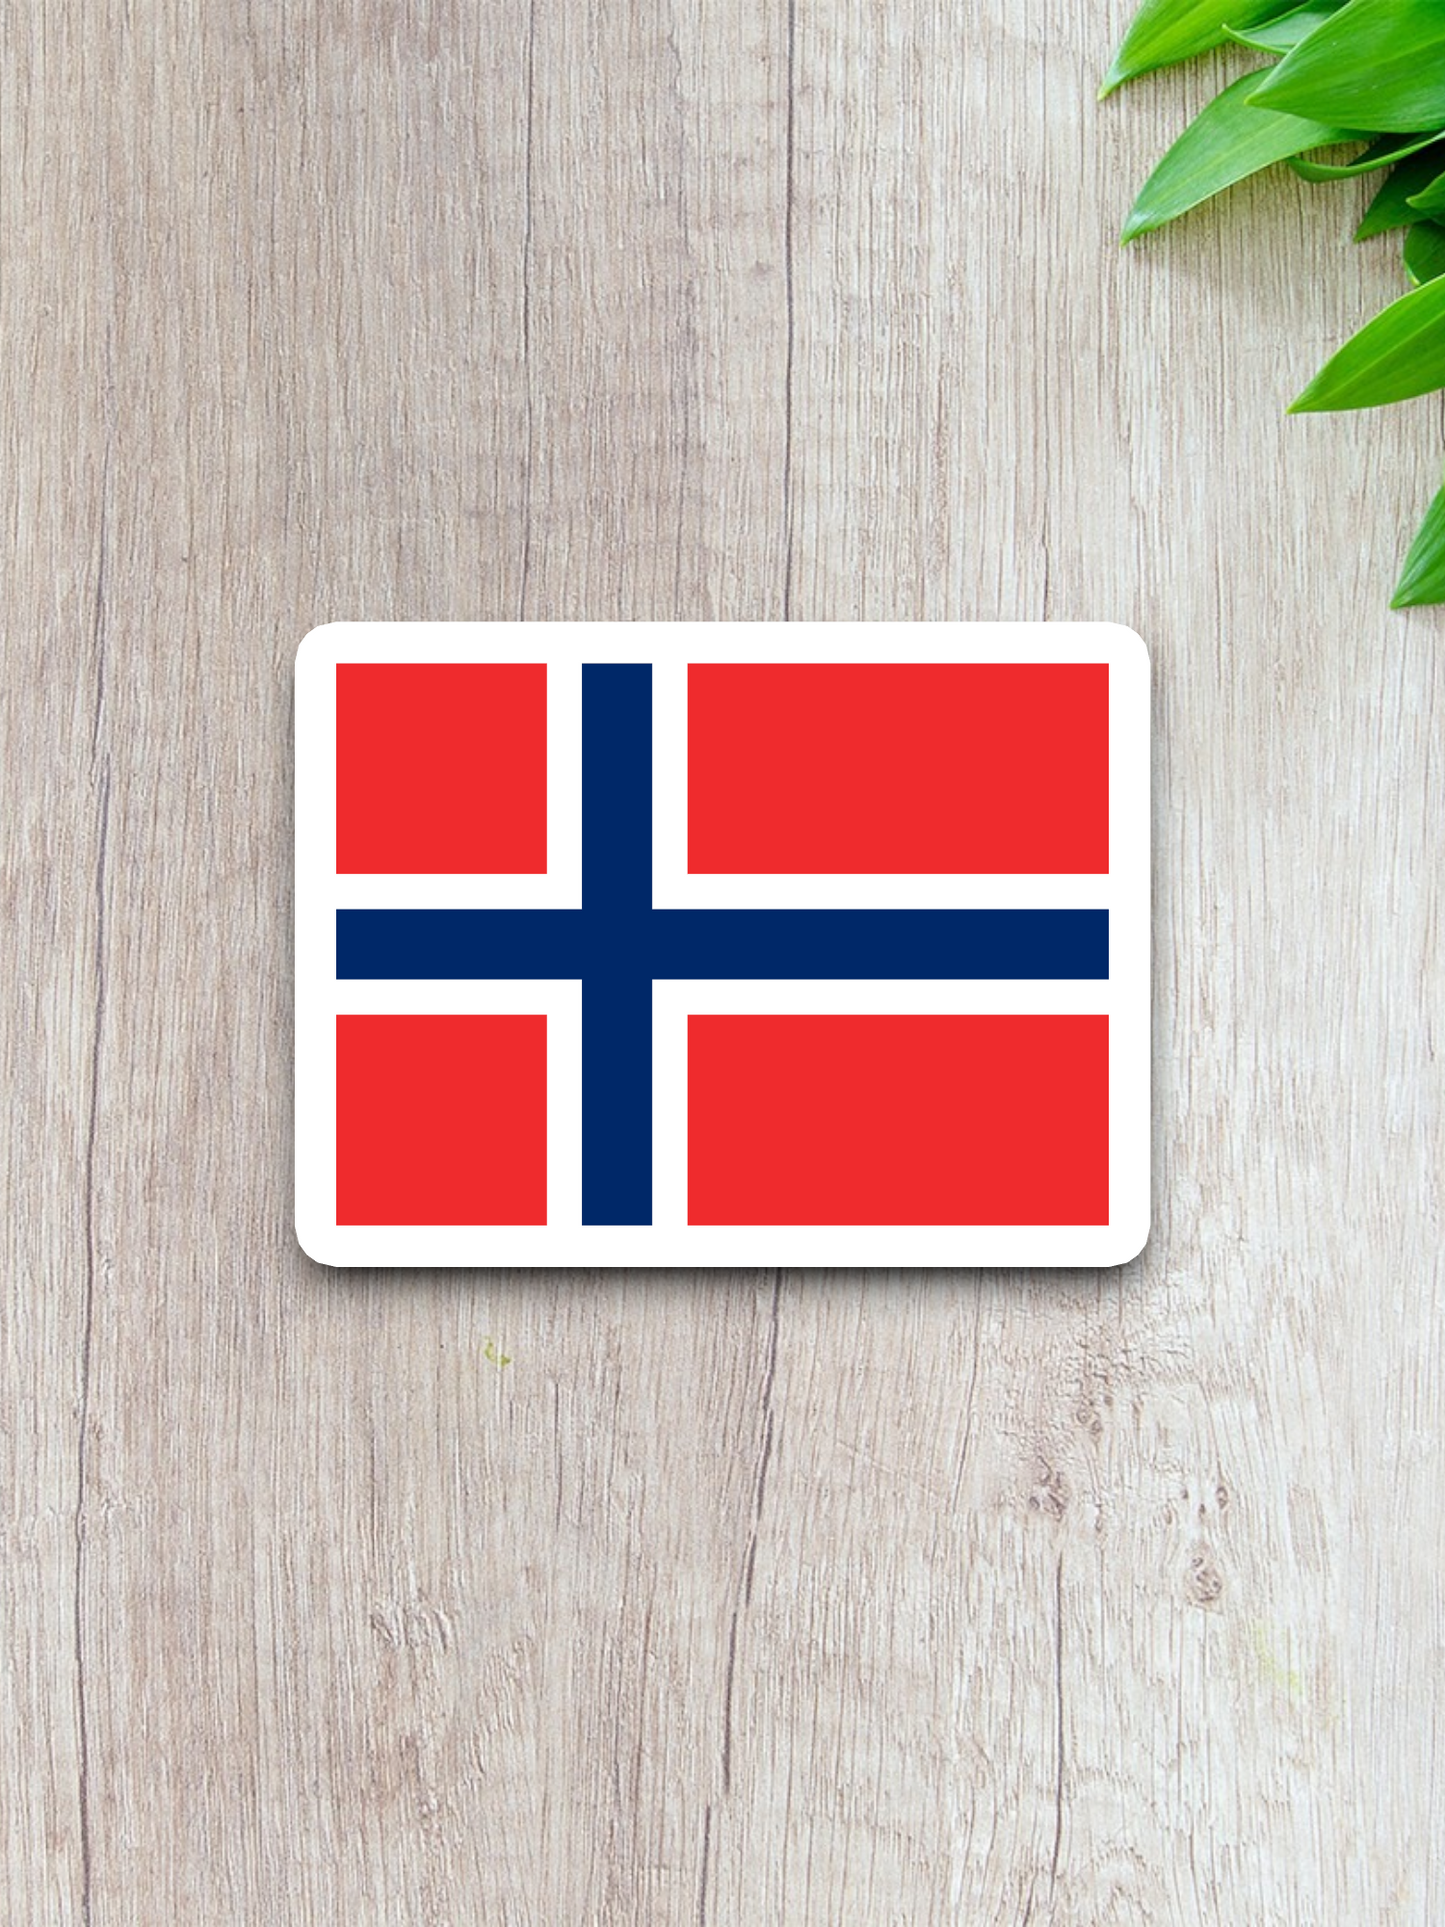 Svalbard and Jan Mayen Flag - International Country Flag Sticker